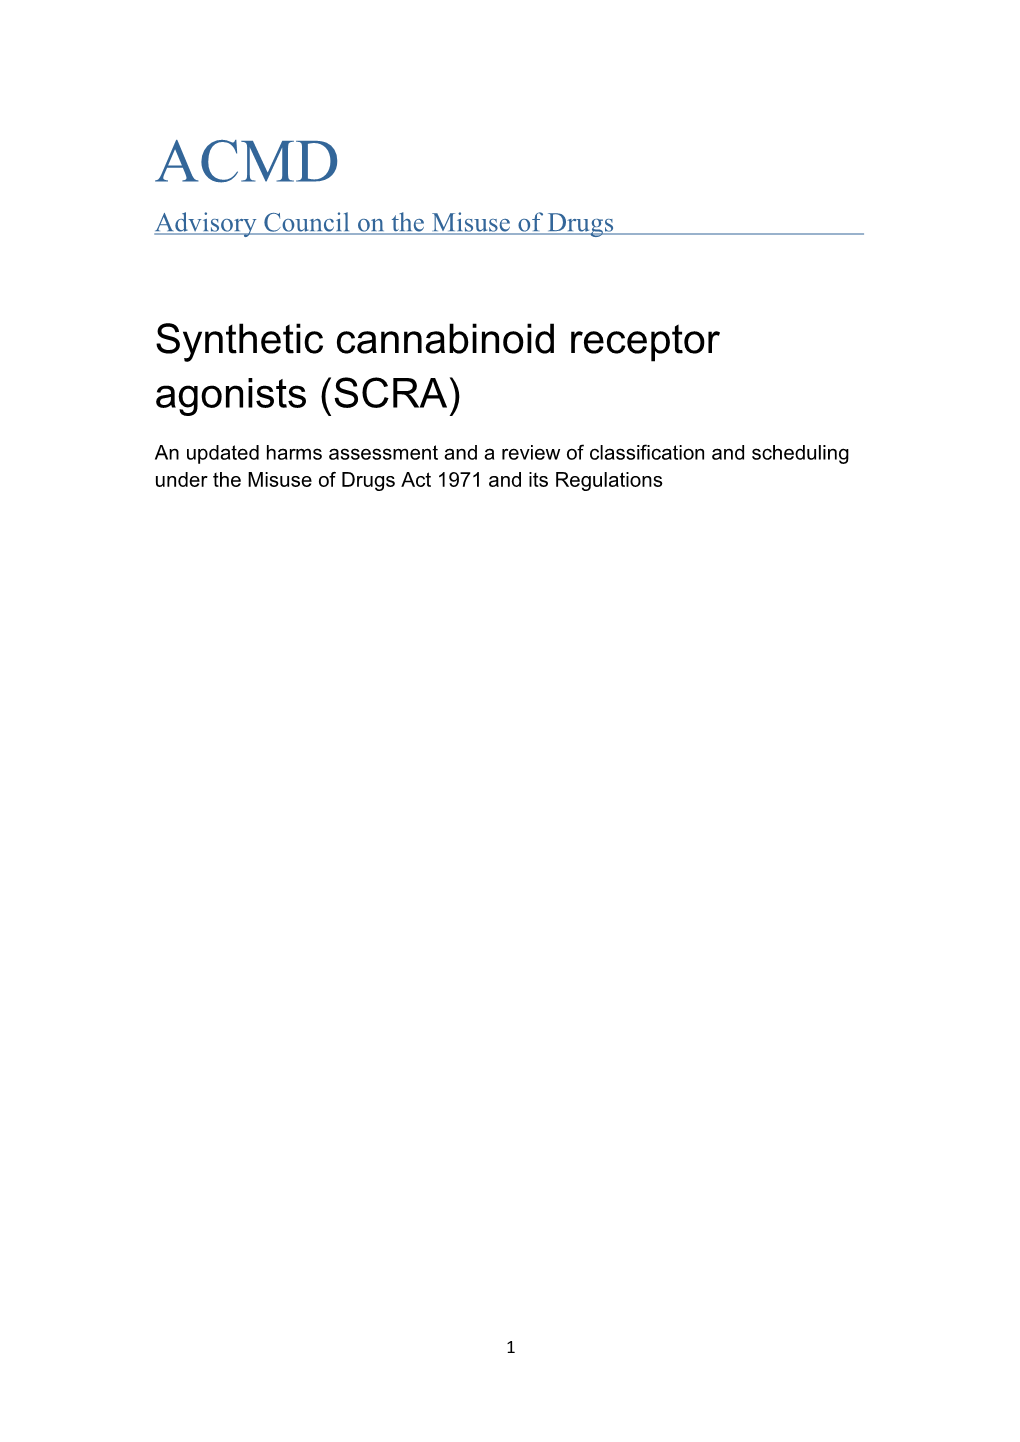 ACMD Synthetic Cannabinoid Receptor Agonists (SCRA)